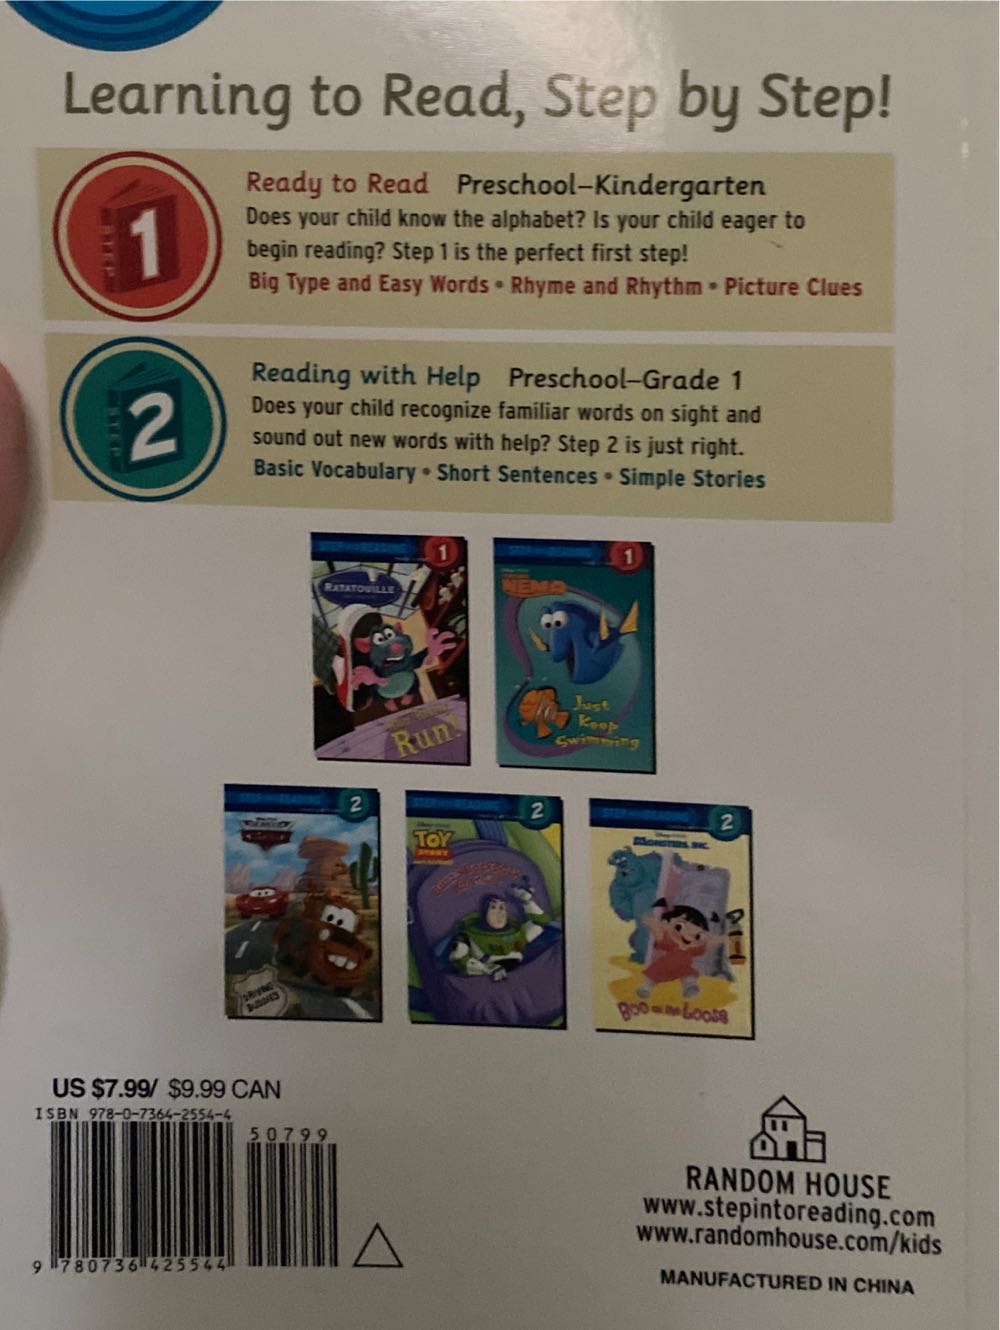 Disney/Pixar Story Collection (Step into Reading) - RH Disney (RH/Disney - Paperback) book collectible [Barcode 9780736425544] - Main Image 2